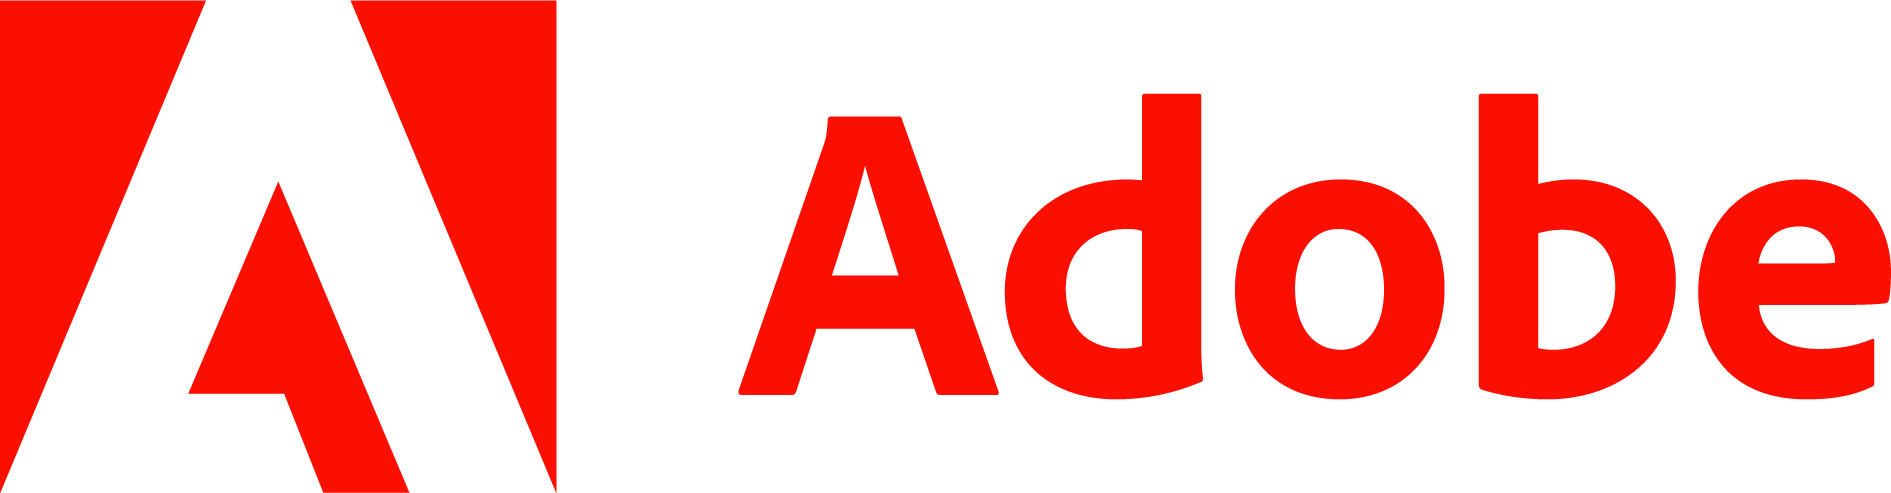 Raffle Sponsor - Adobe